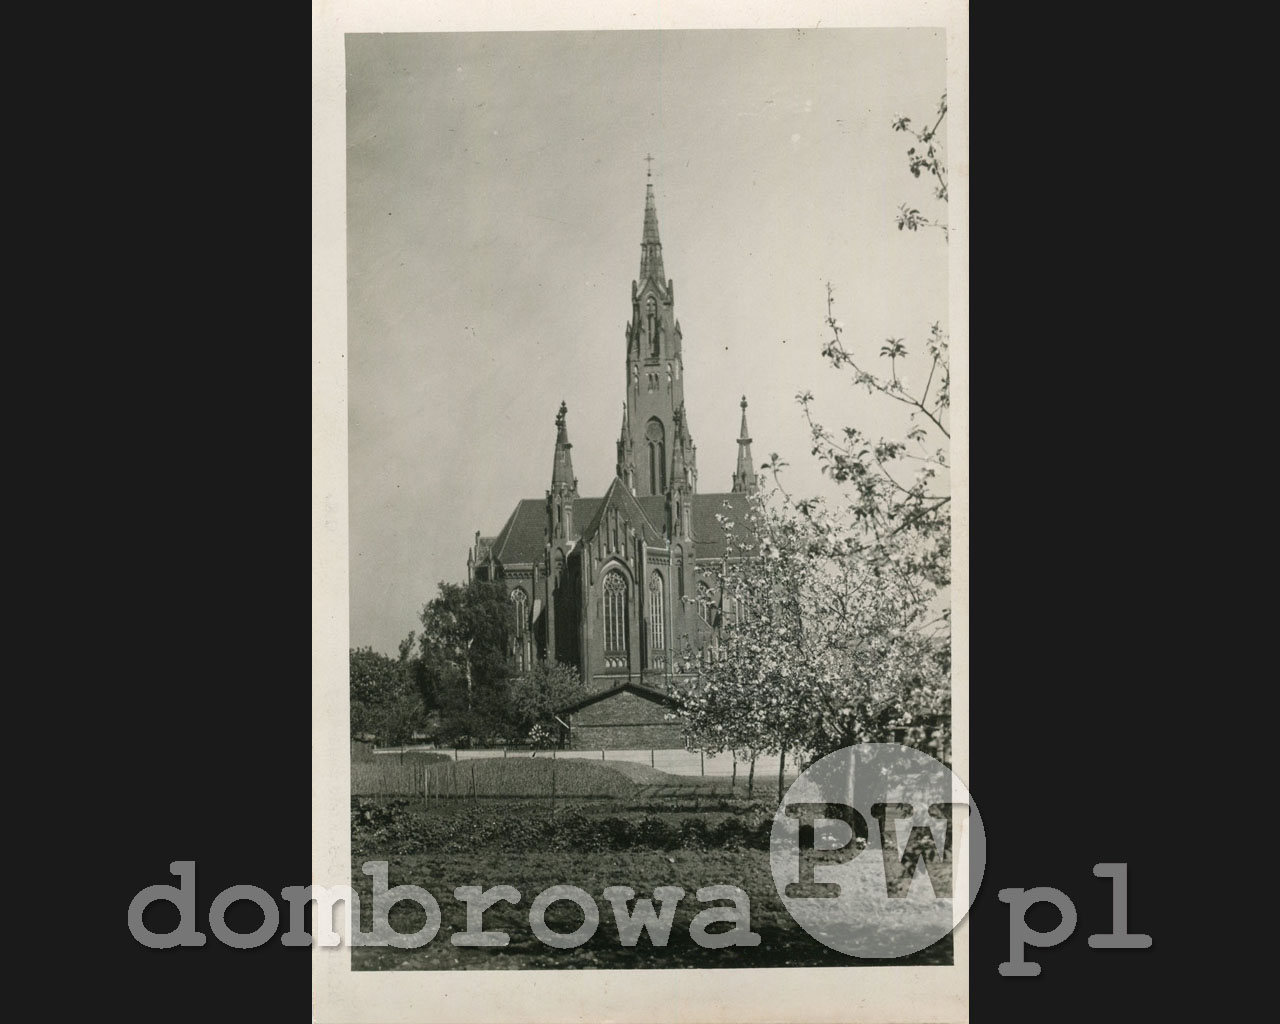 1940 r. Dombrowa O-S, Kreis Bendsburg (G.K.) (6)